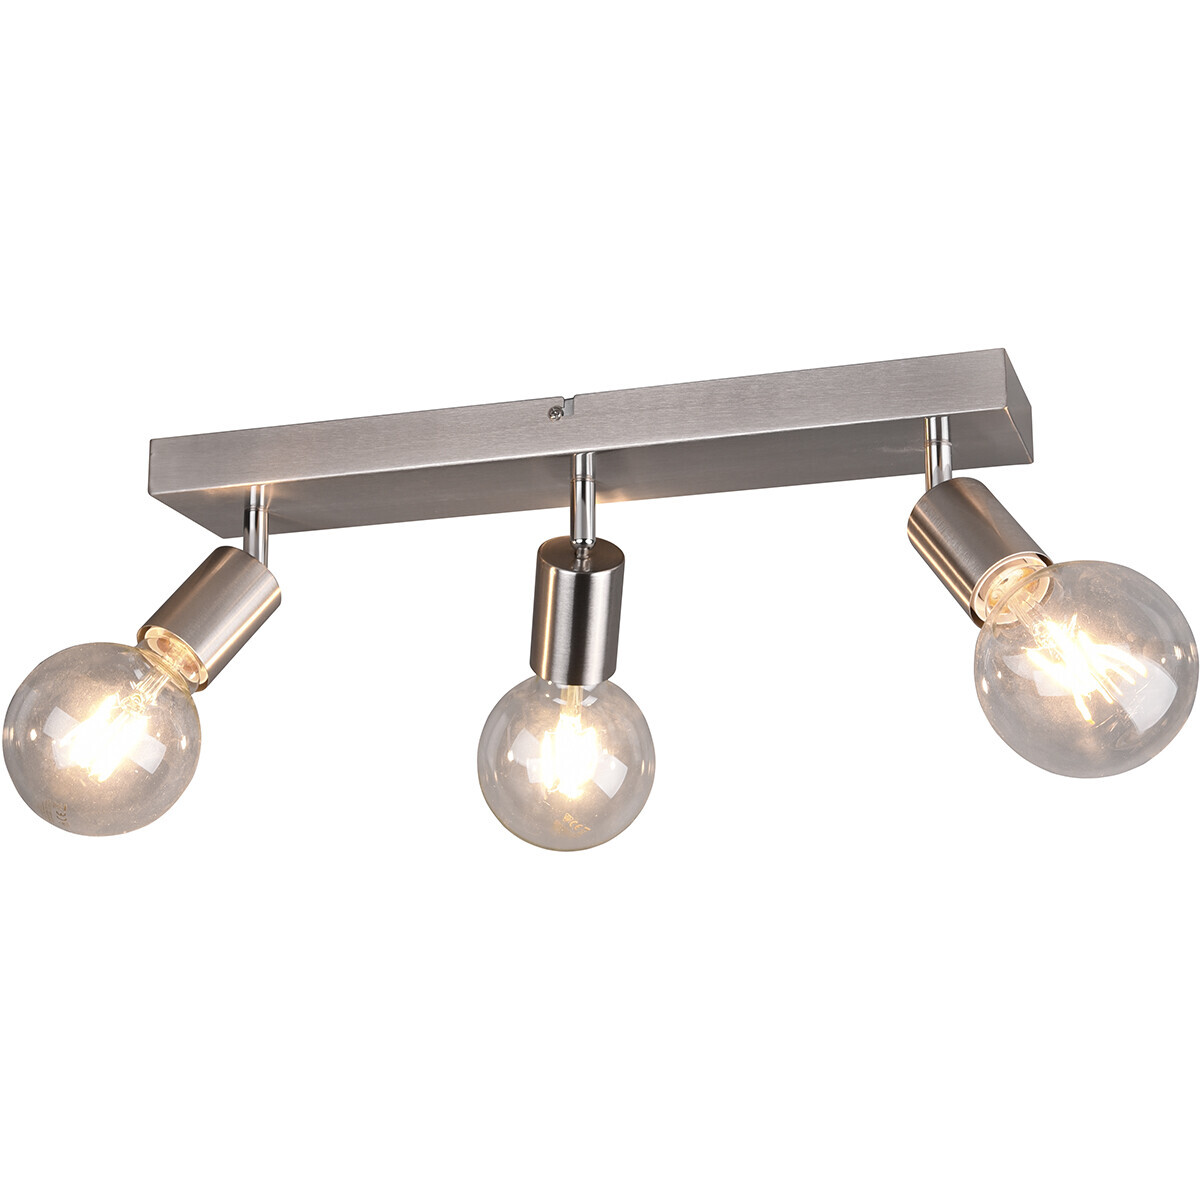 BES LED LED Plafondspot - Trion Zuncka - E27 Fitting - 3-lichts - Rechthoek - Mat Nikkel - Aluminium